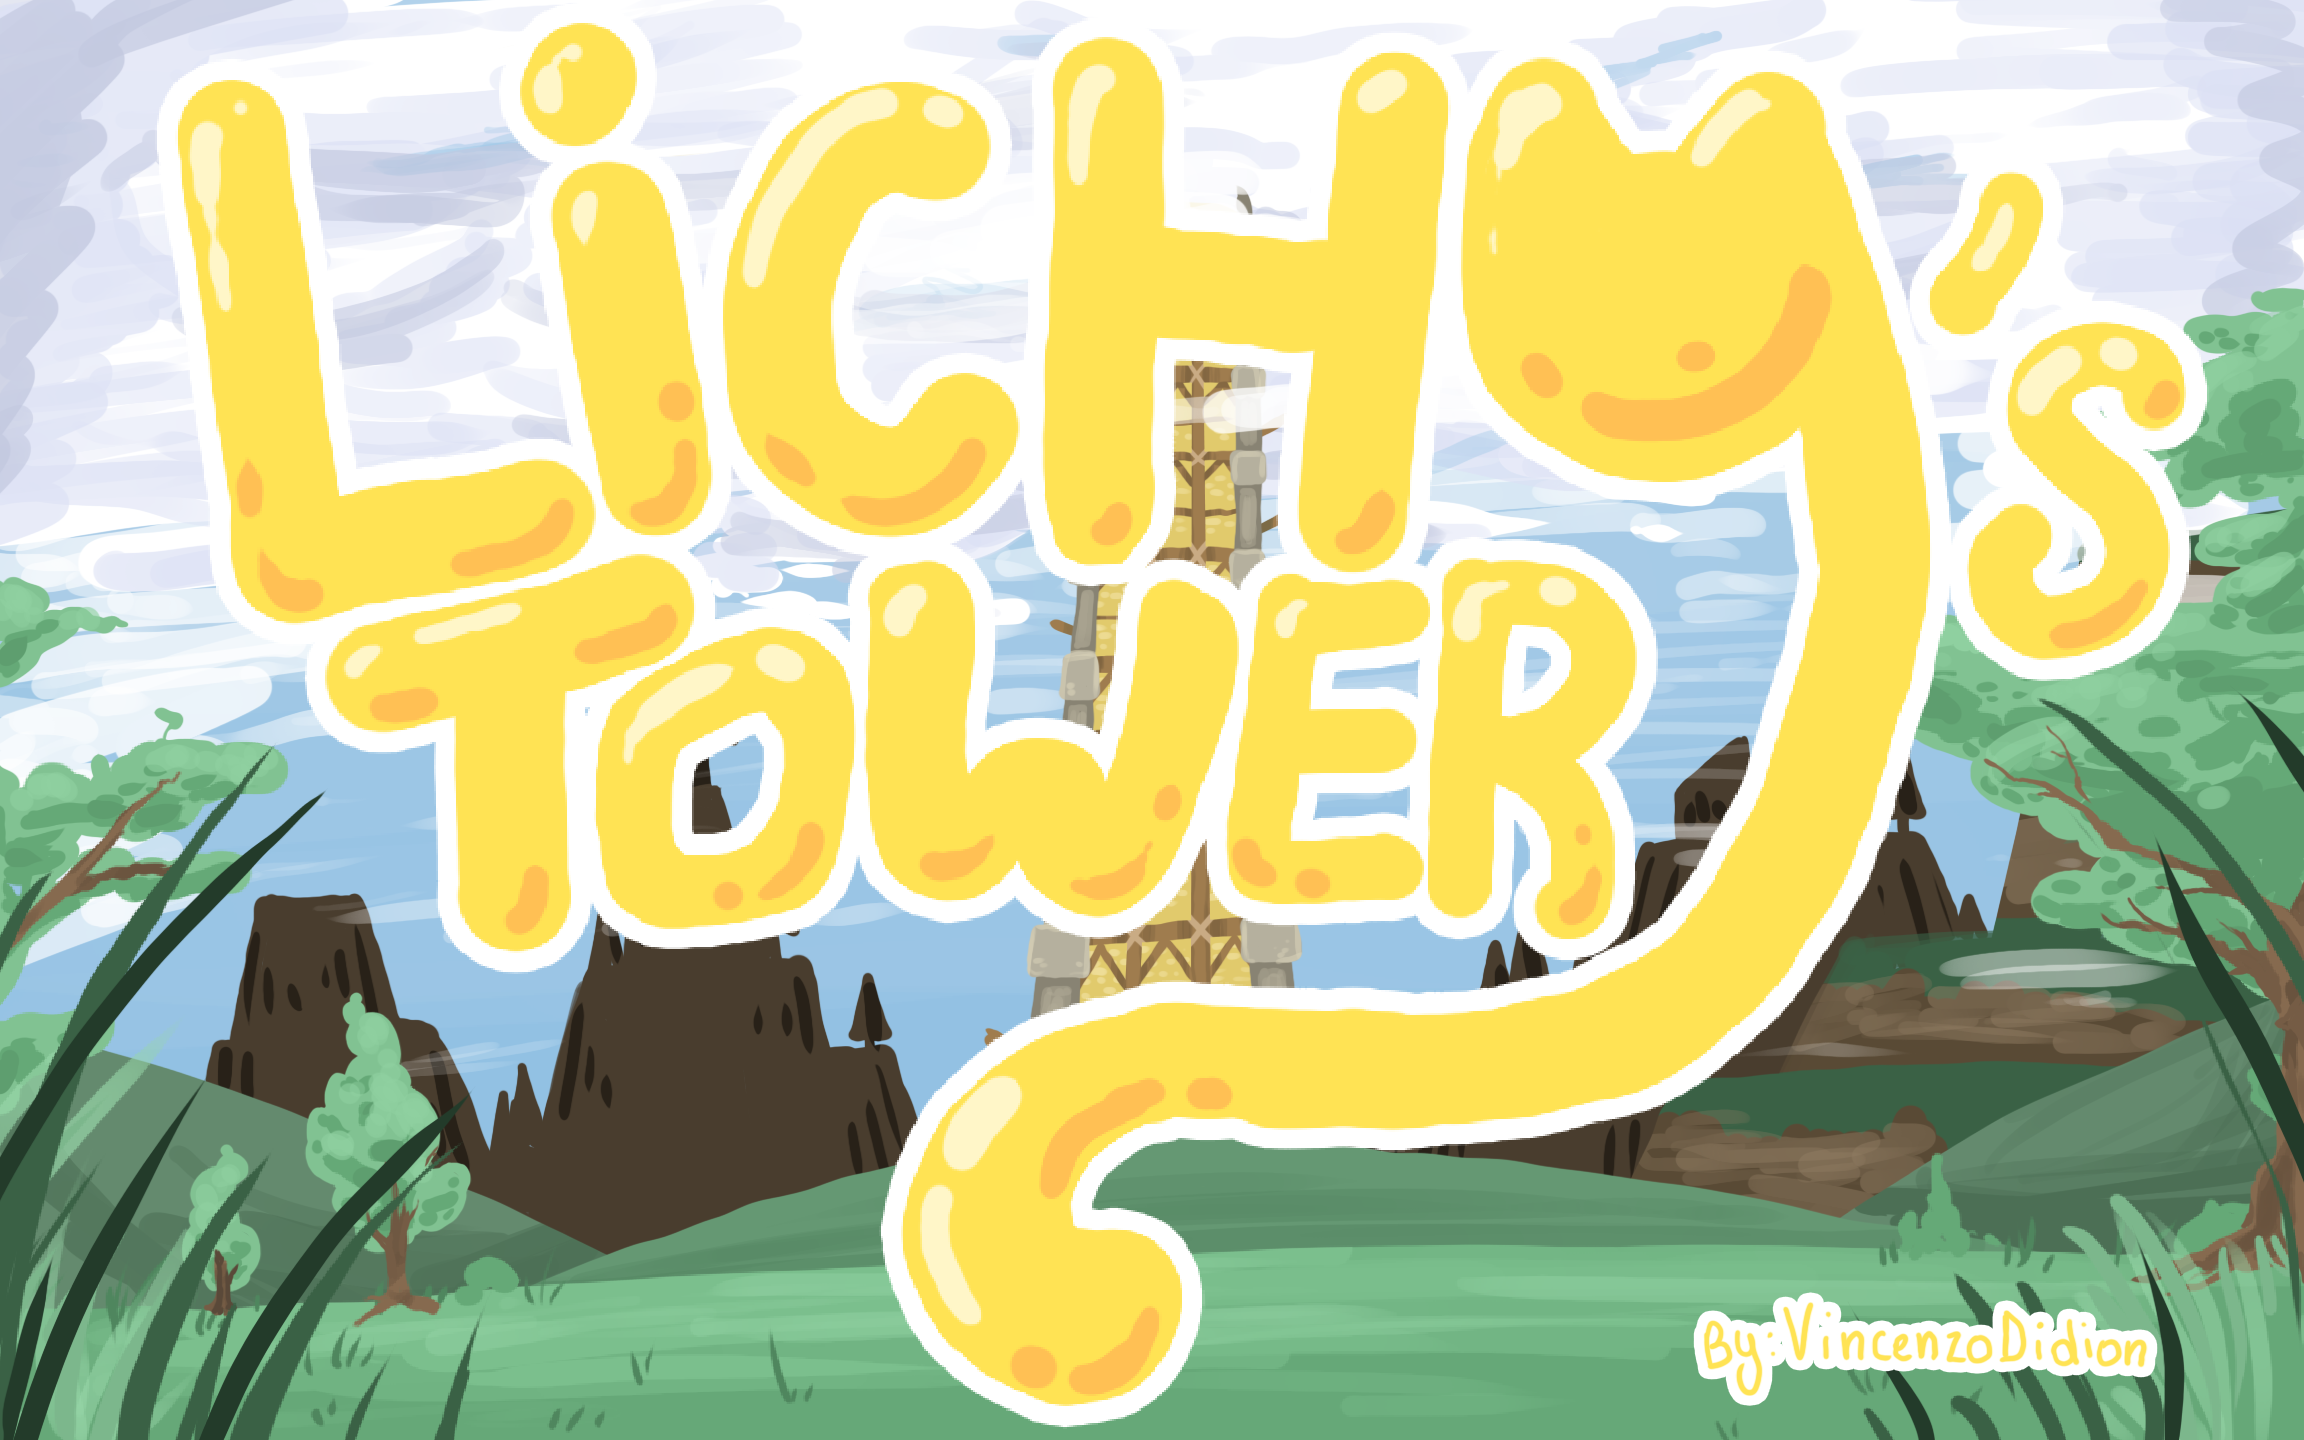 LICHY'S TOWER